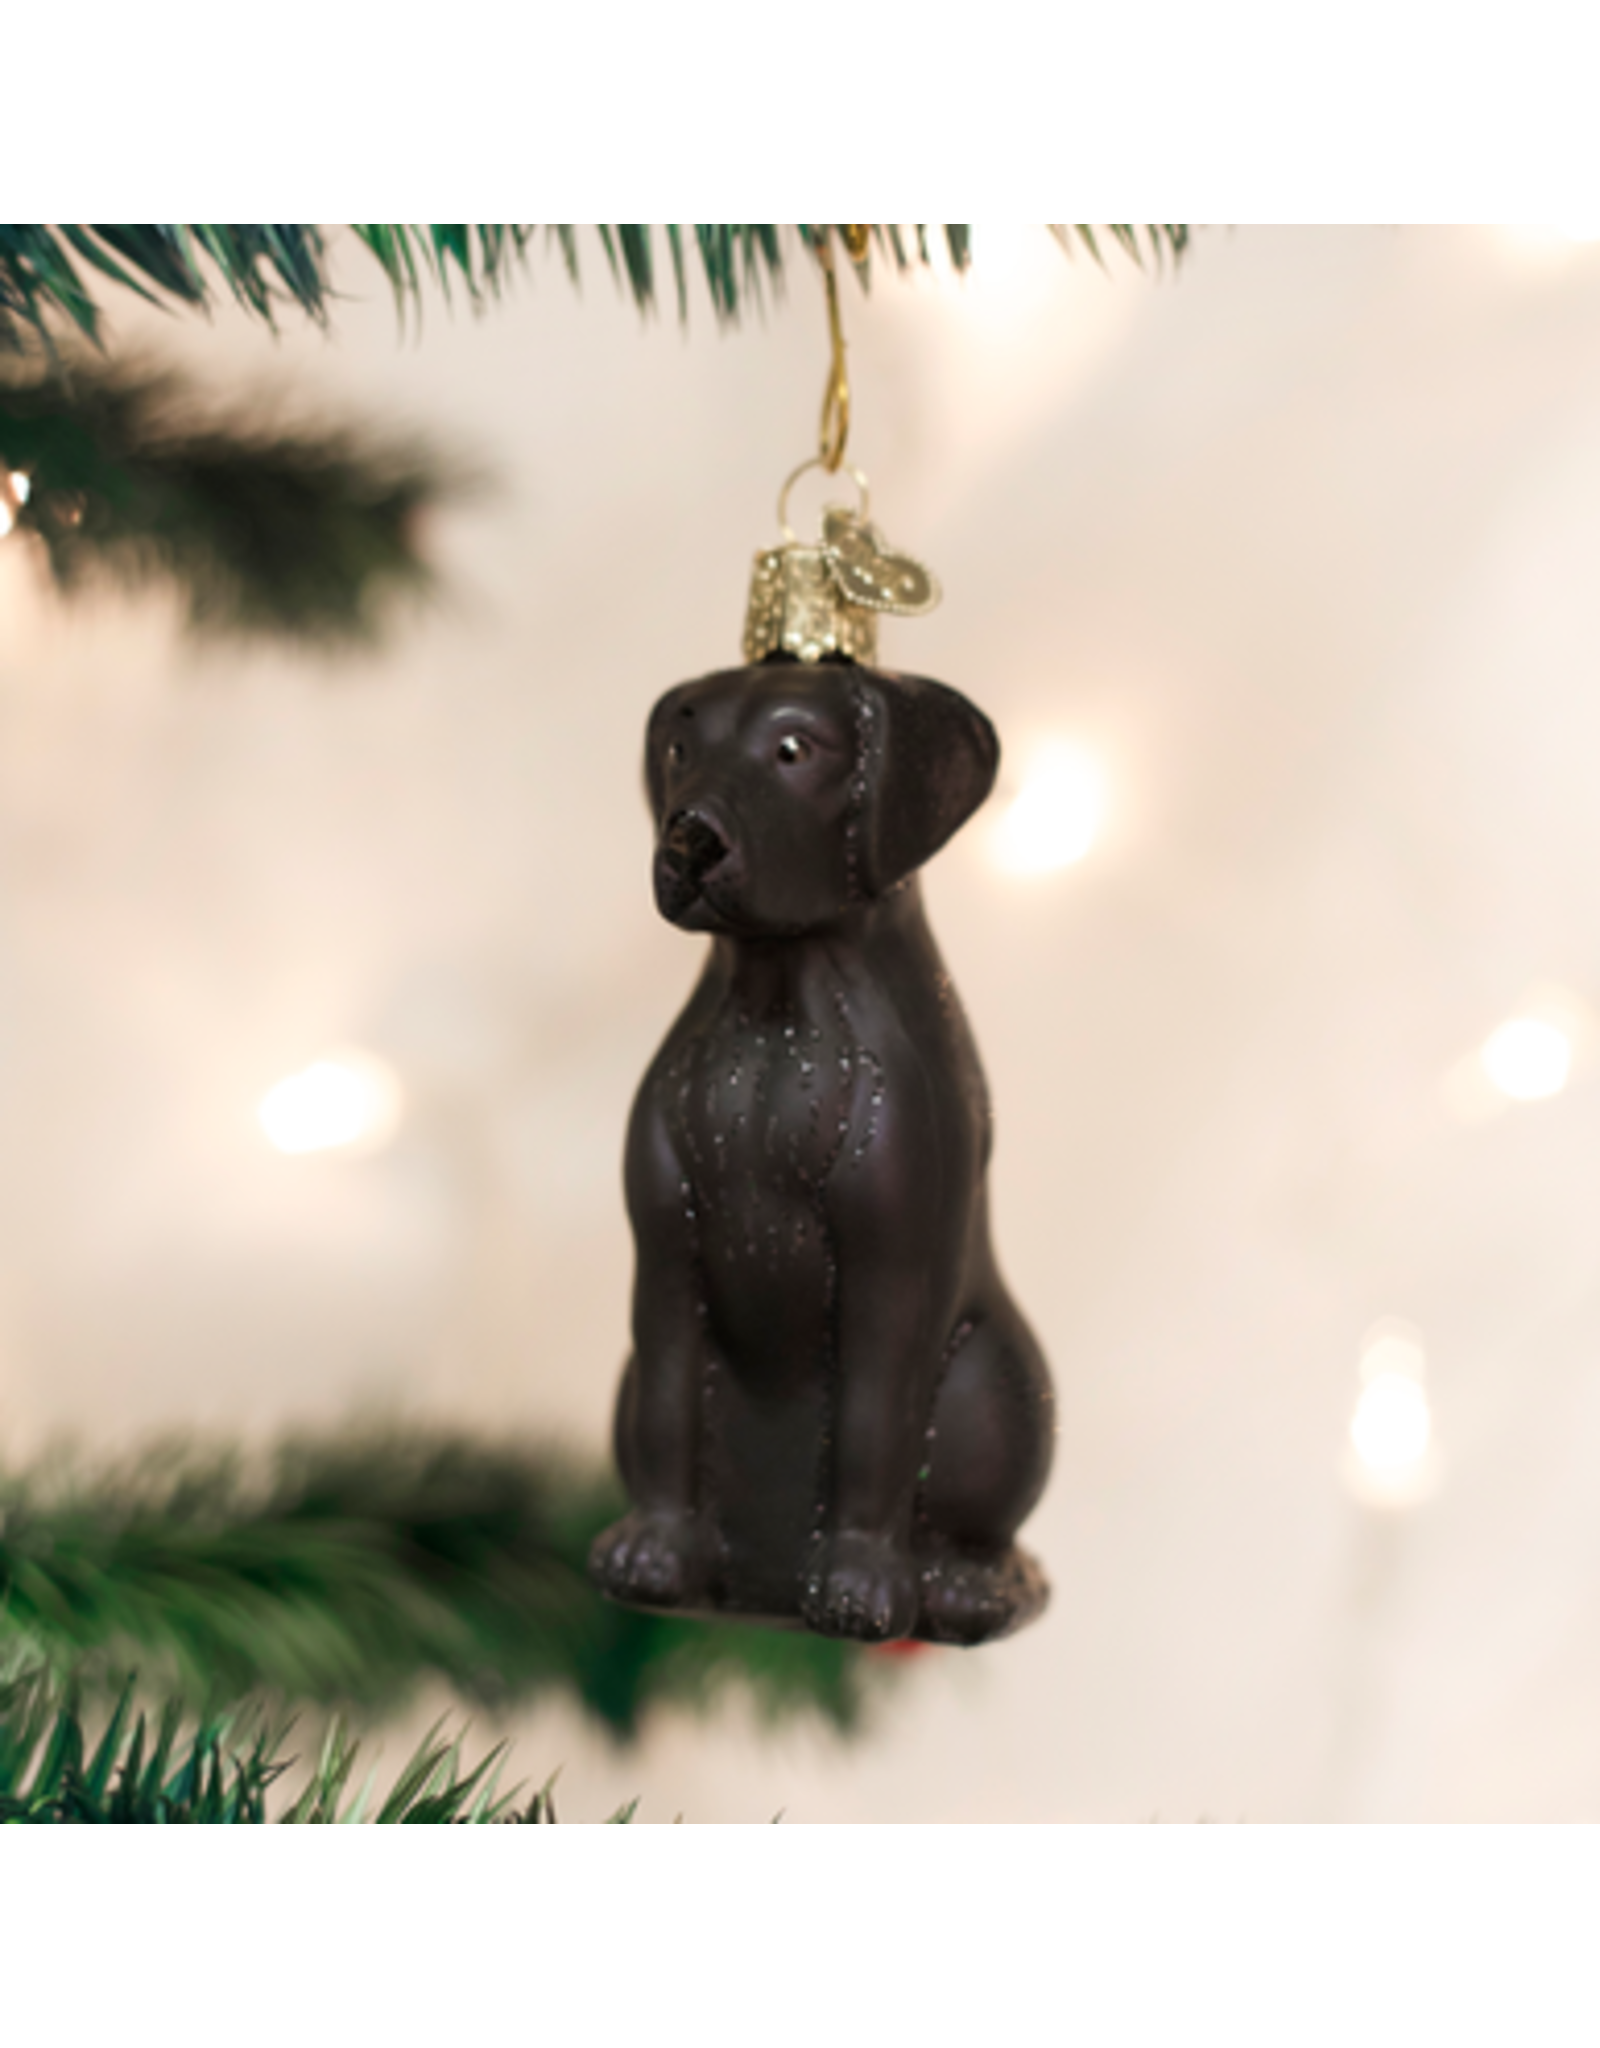 Old World Christmas Black Labrador Ornament